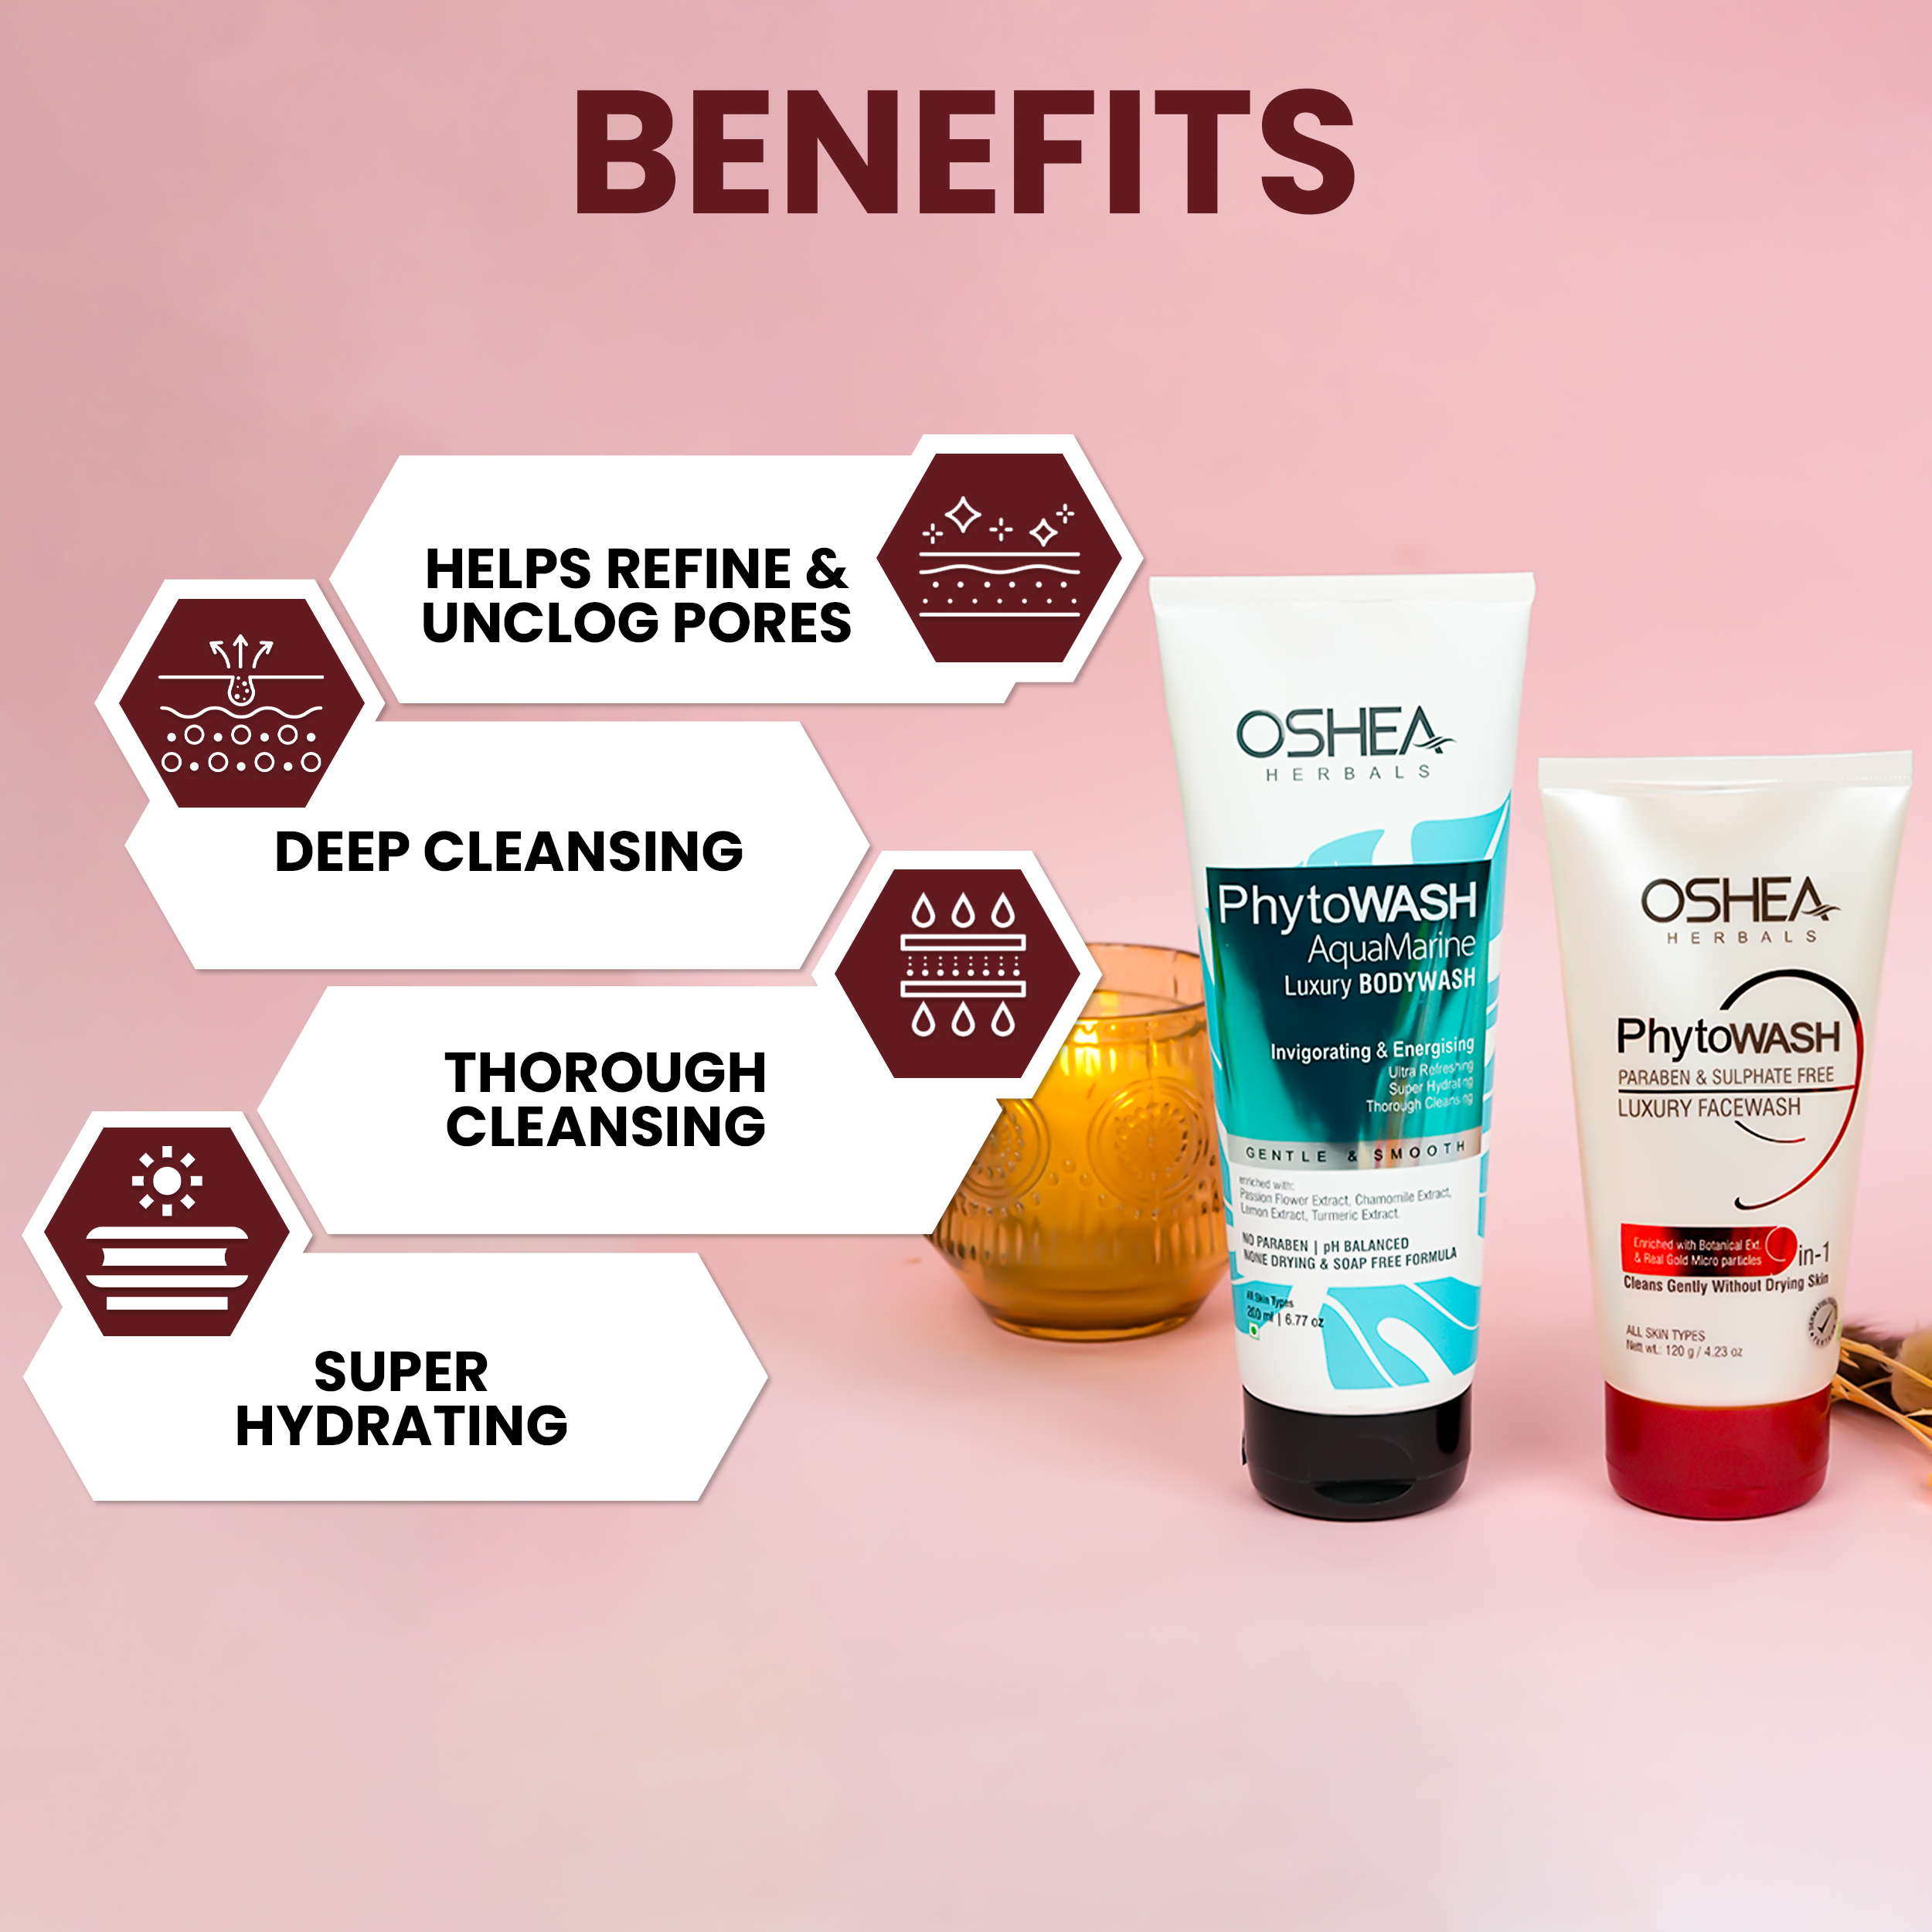  Benefits Phytowash Luxury Face wash Phytowash Aqua Marine Luxury Body wash Oshea Herbals